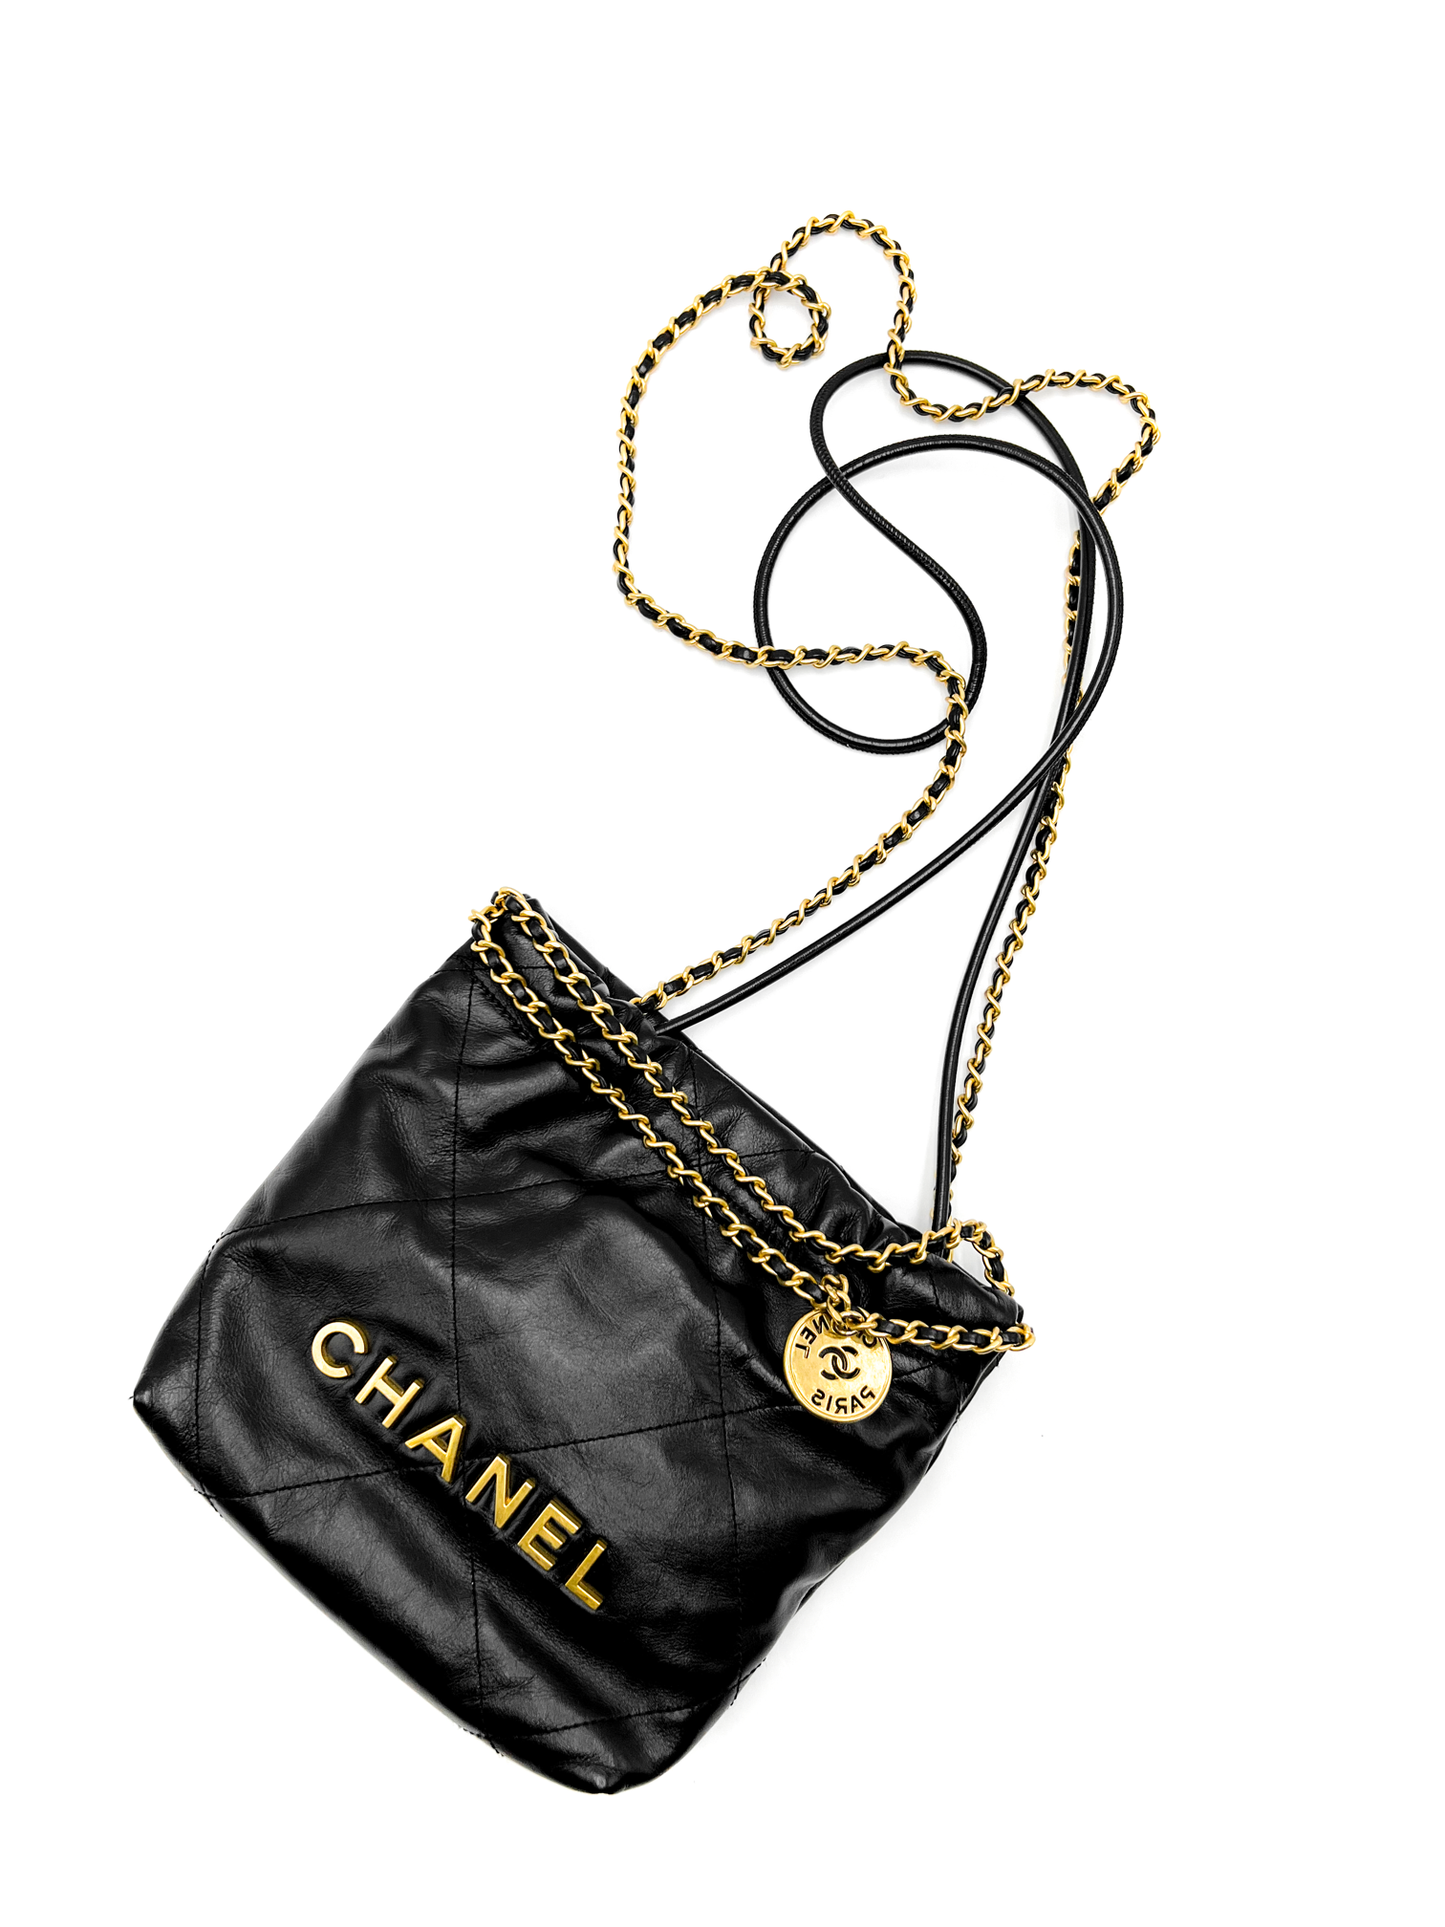 Chanel 22 Mini Handbag Hobo Black with Gold Aged Hardware